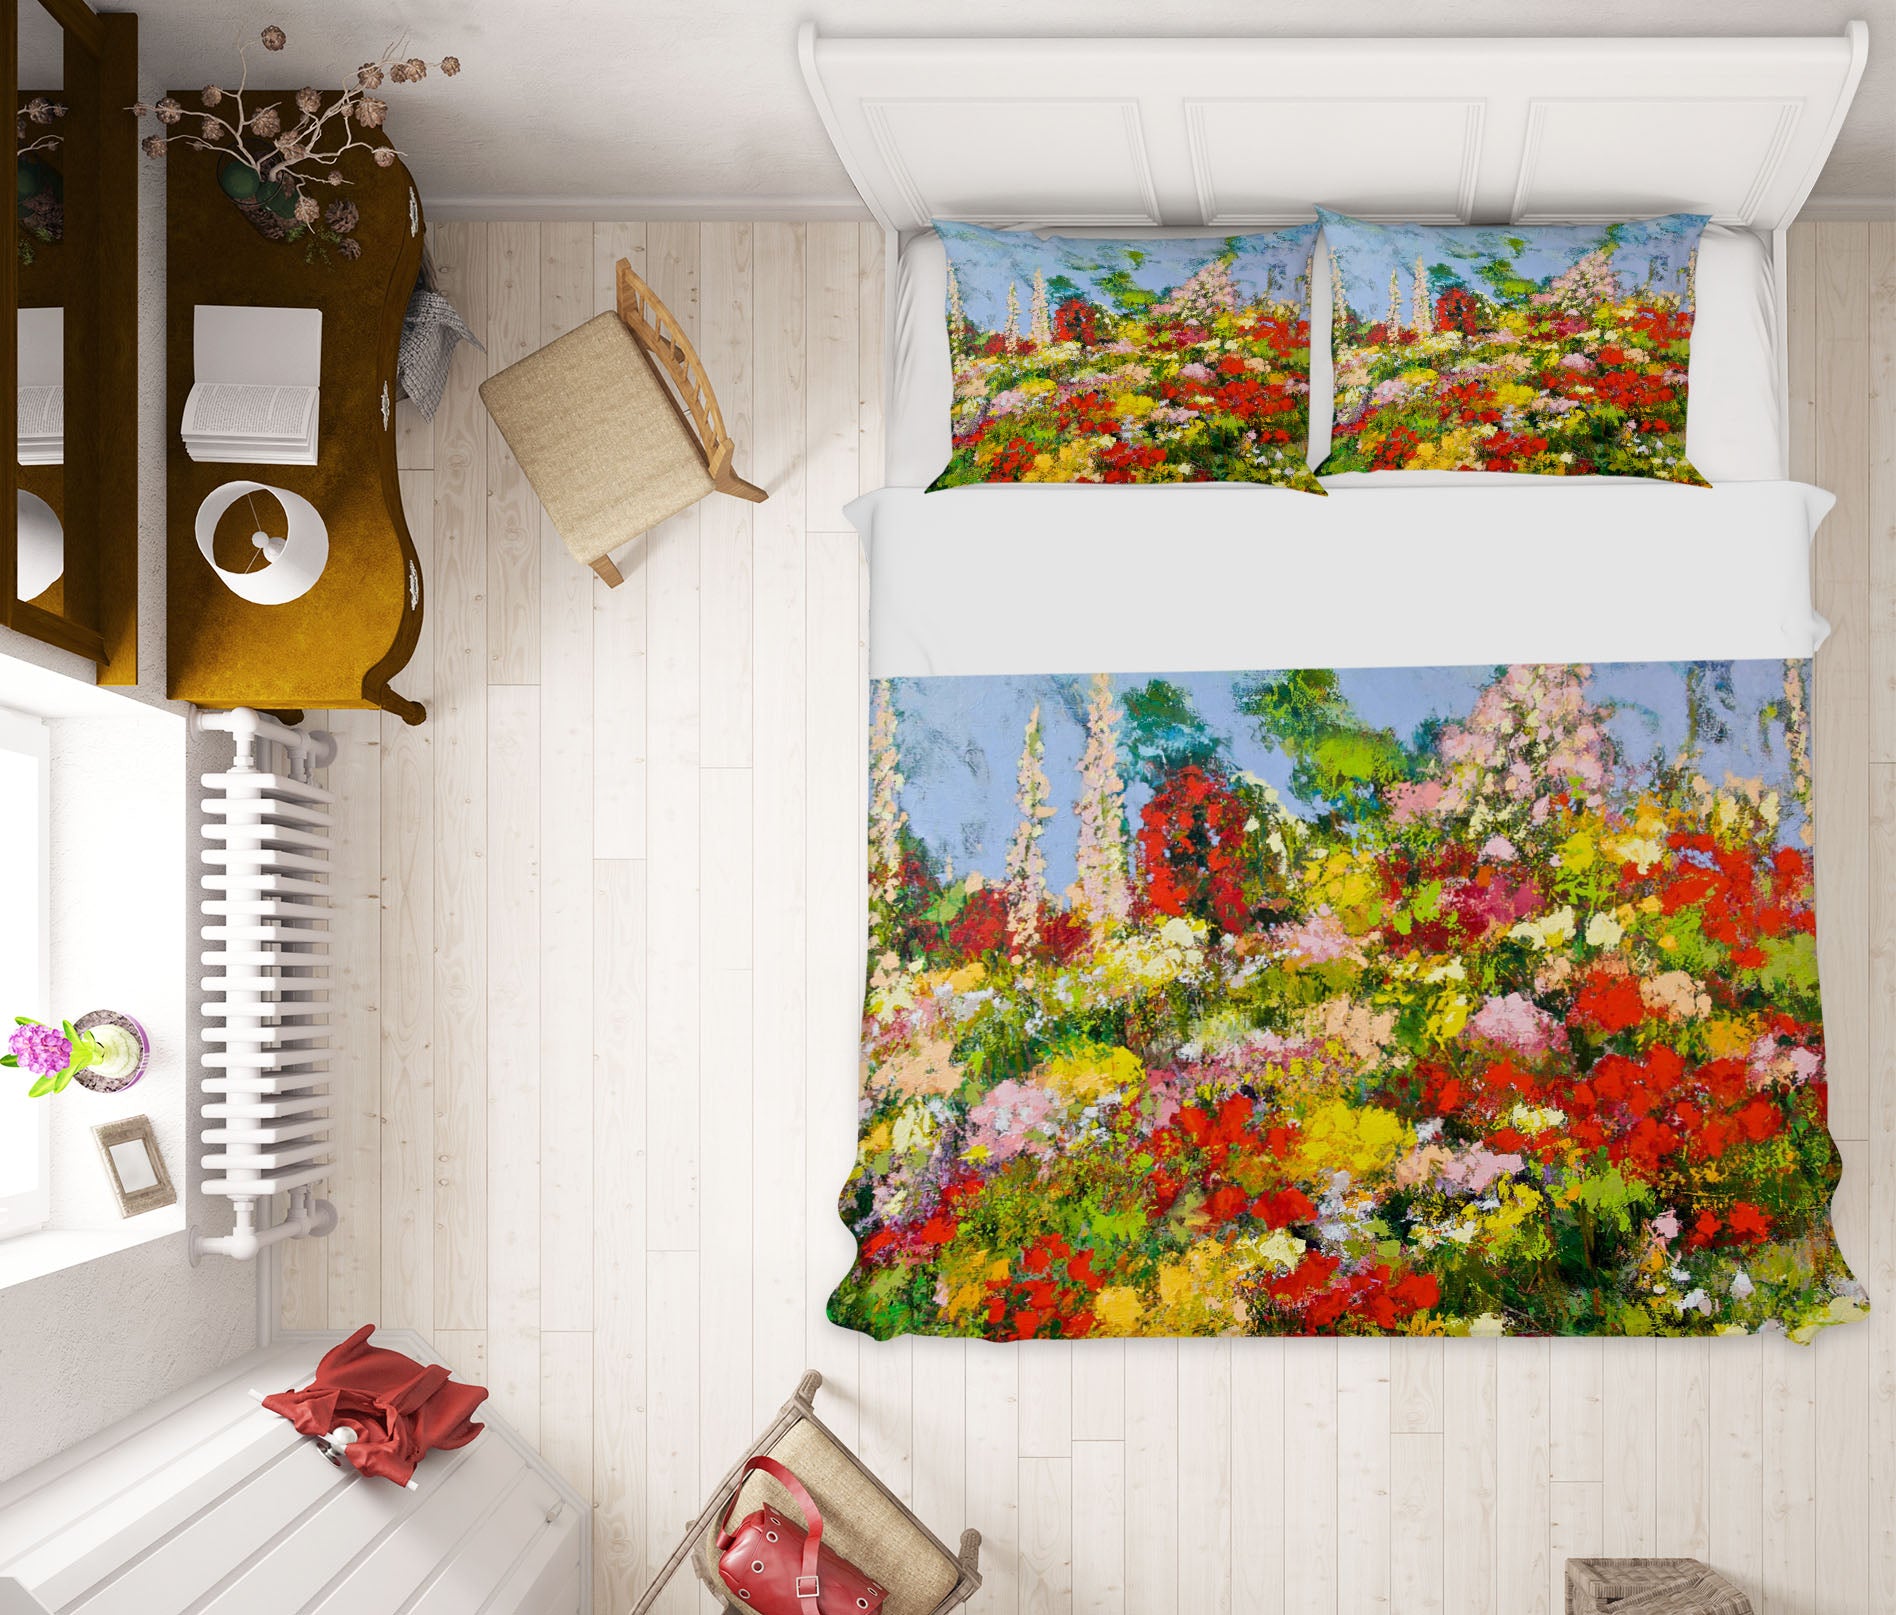 3D Overgrown Painting 1073 Allan P. Friedlander Bedding Bed Pillowcases Quilt